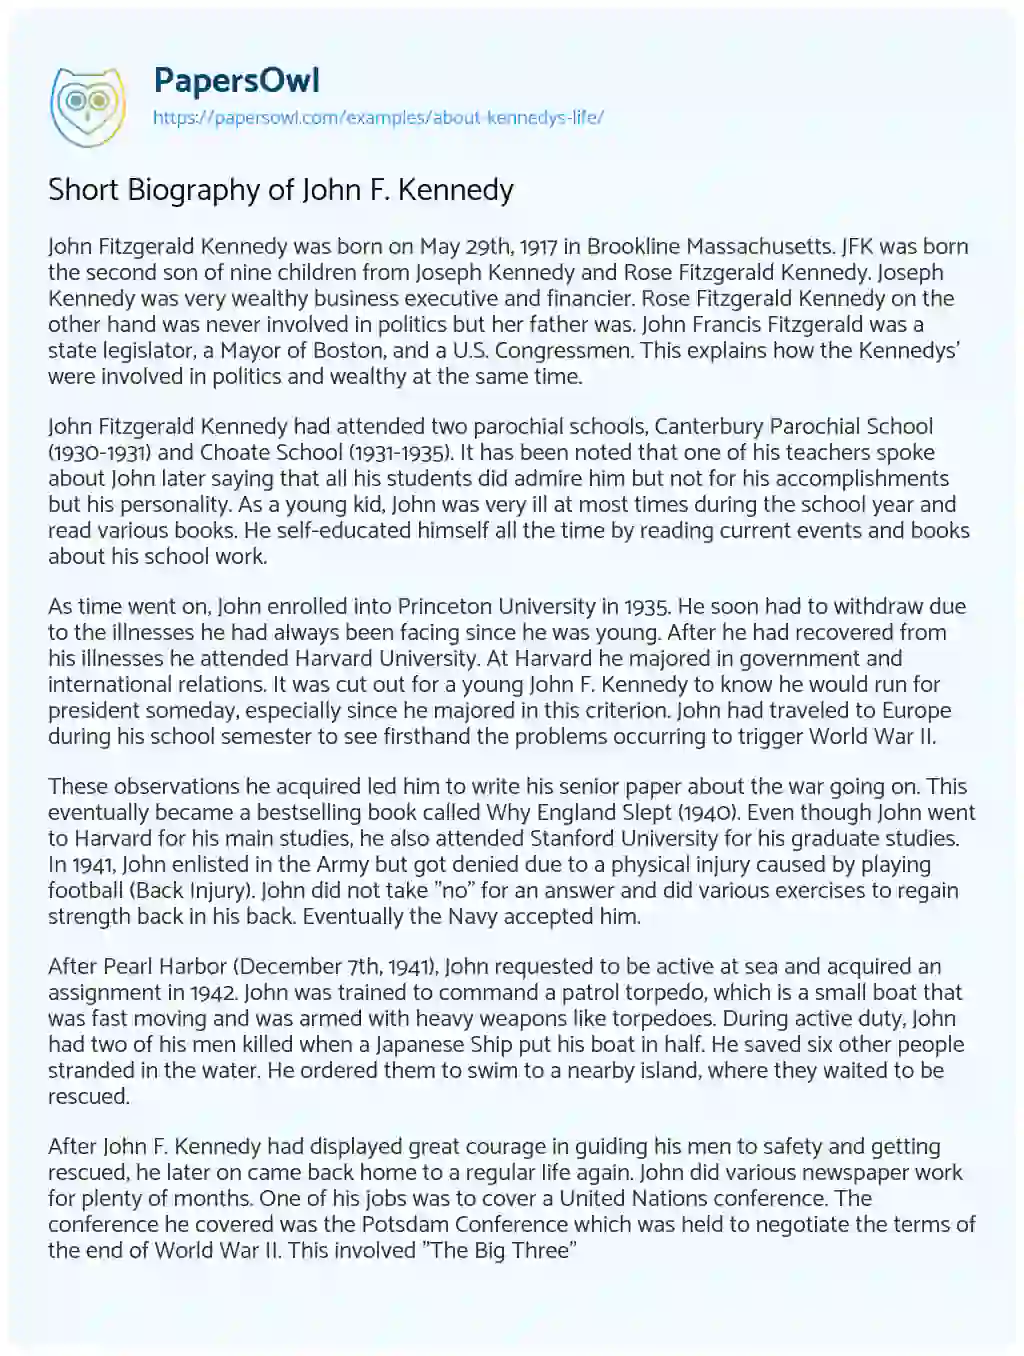 Essay on Short Biography of John F. Kennedy